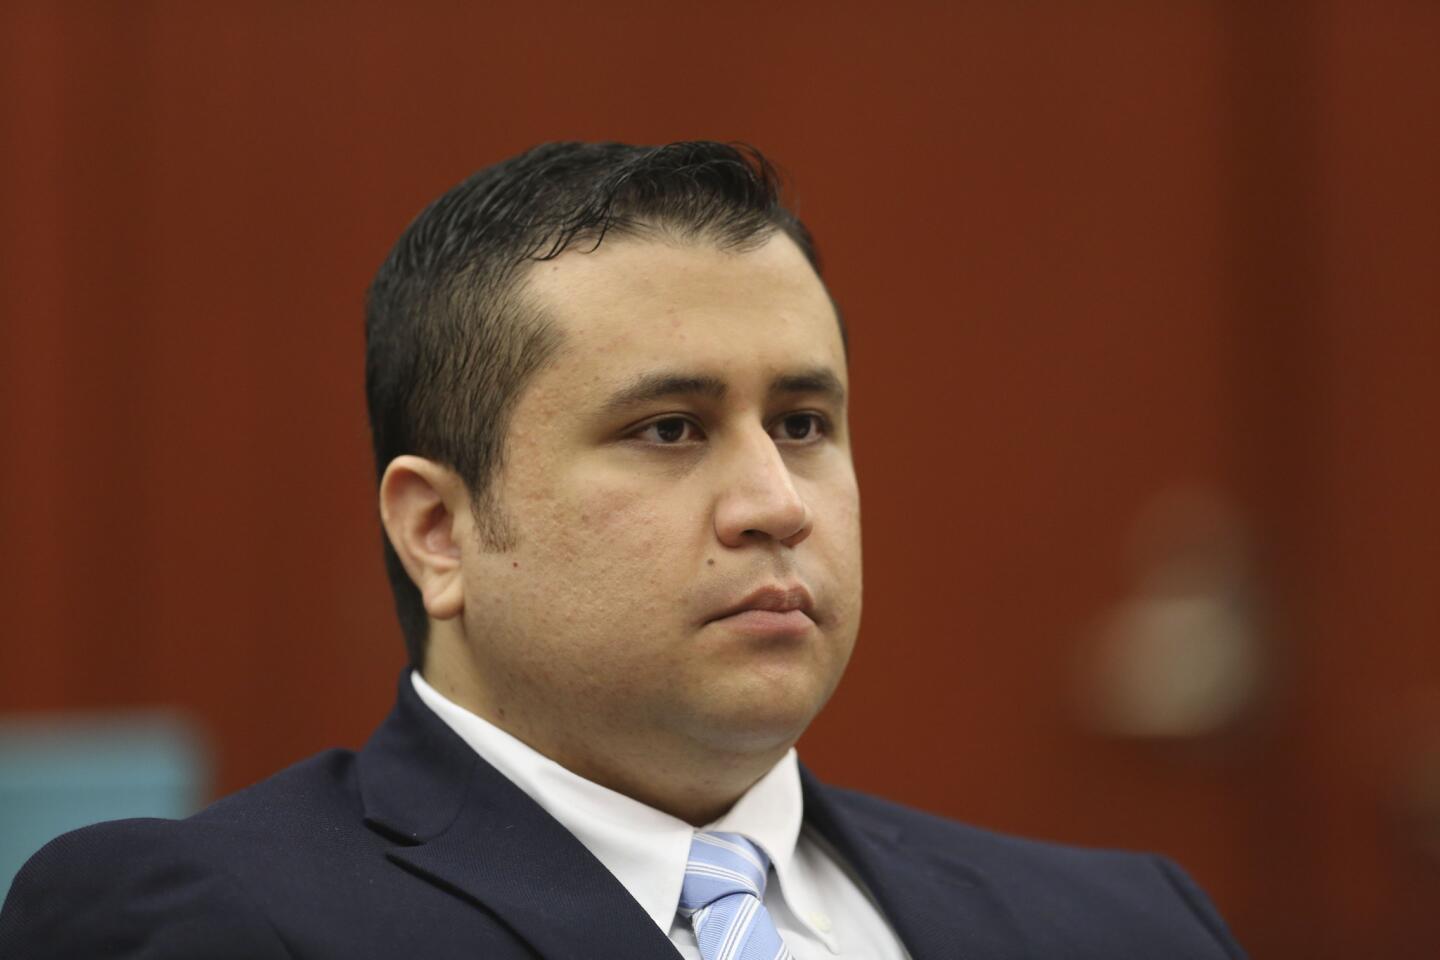 George Zimmerman Trial Day 9